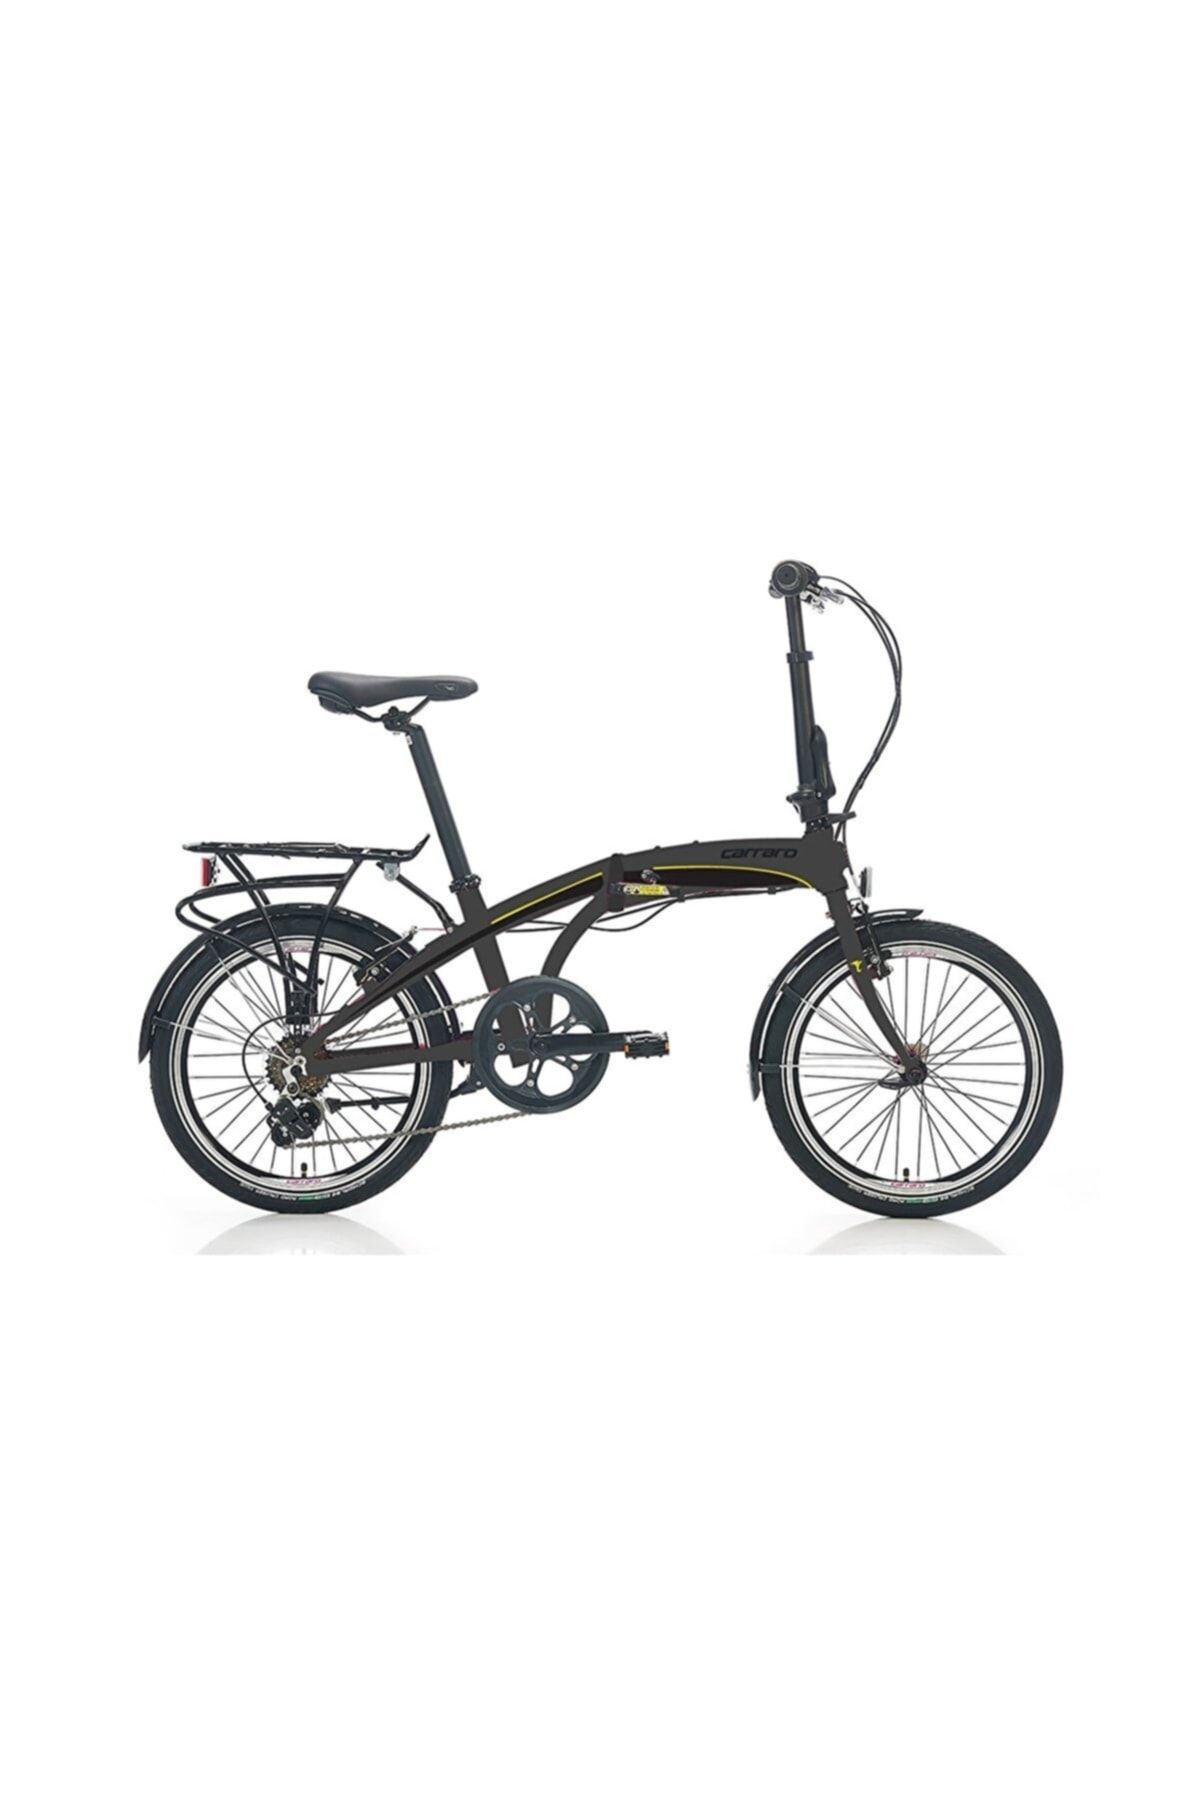 Carraro Flexı 106 Katlanır Bisiklet 320h V 20 Jant 6 Vites Metalik-antrasit-siyah-sarı